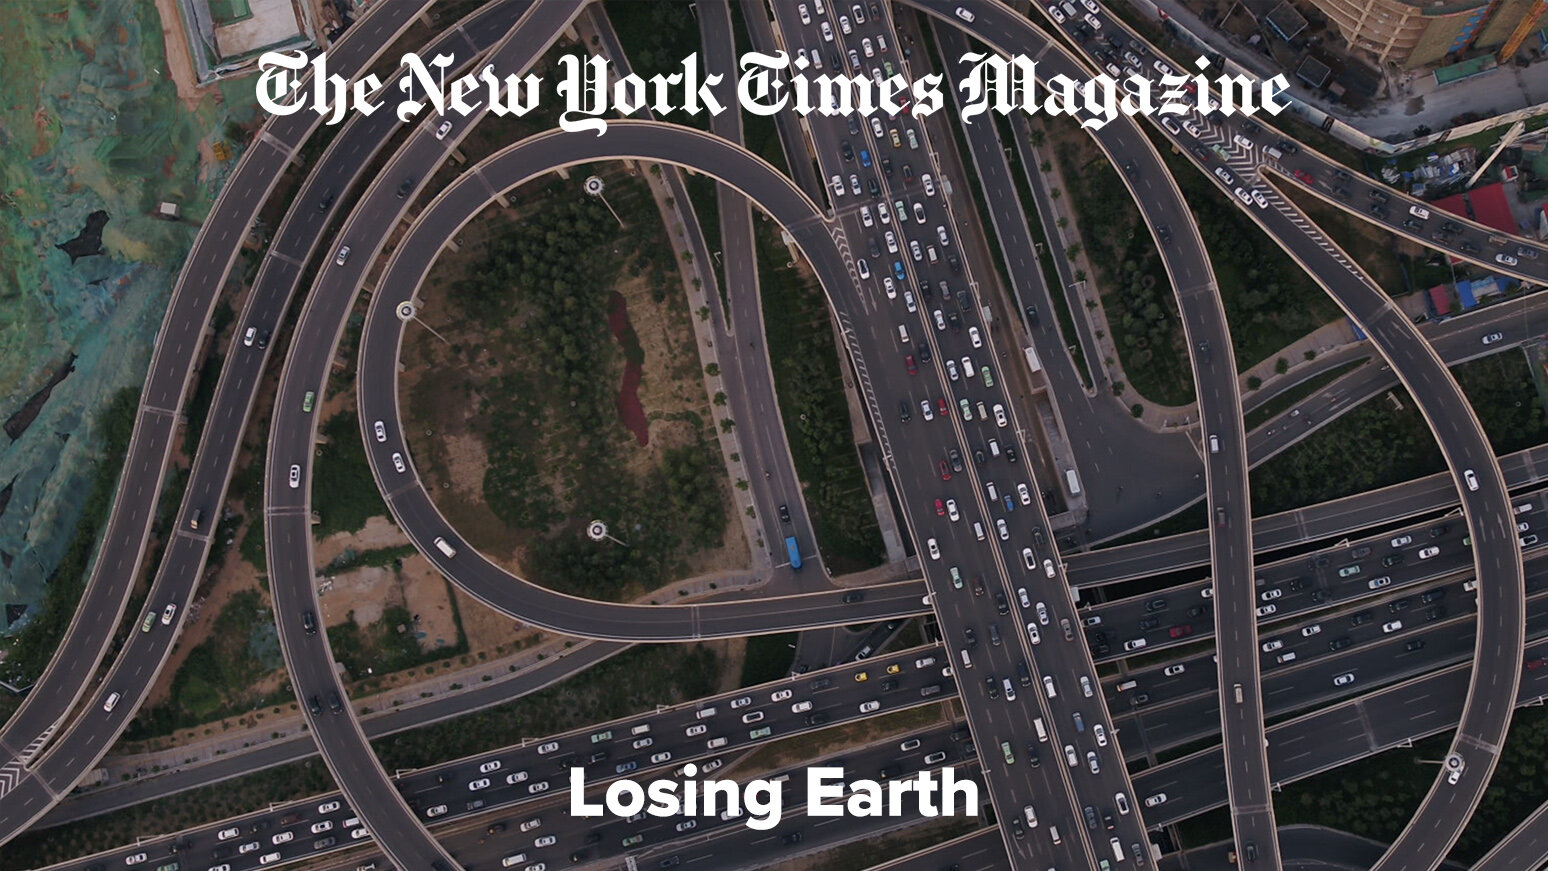 NYT Climate thumb.jpg